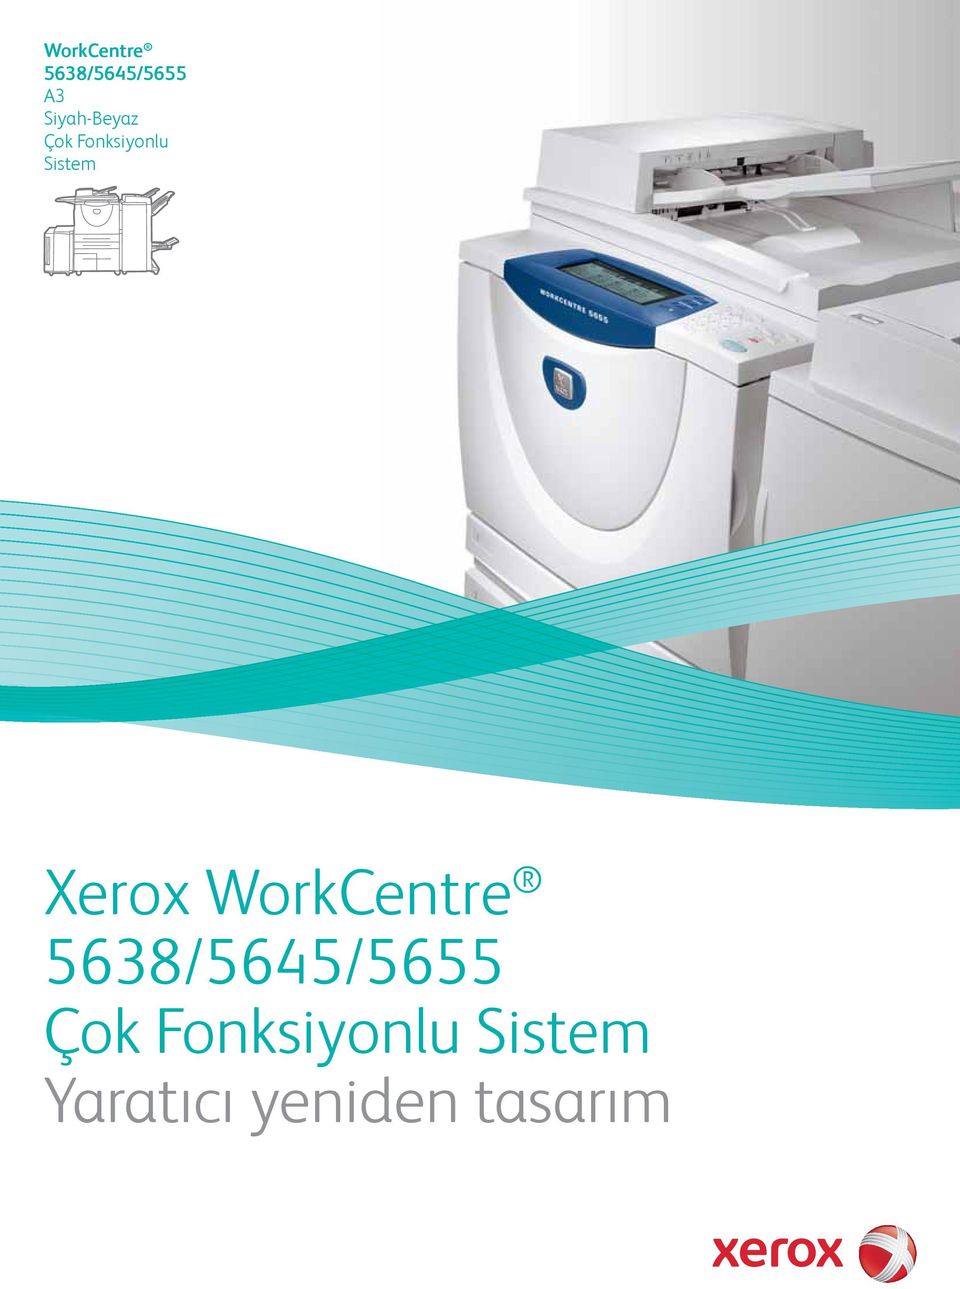 Xerox WorkCentre 5638/5645/5655 Çok